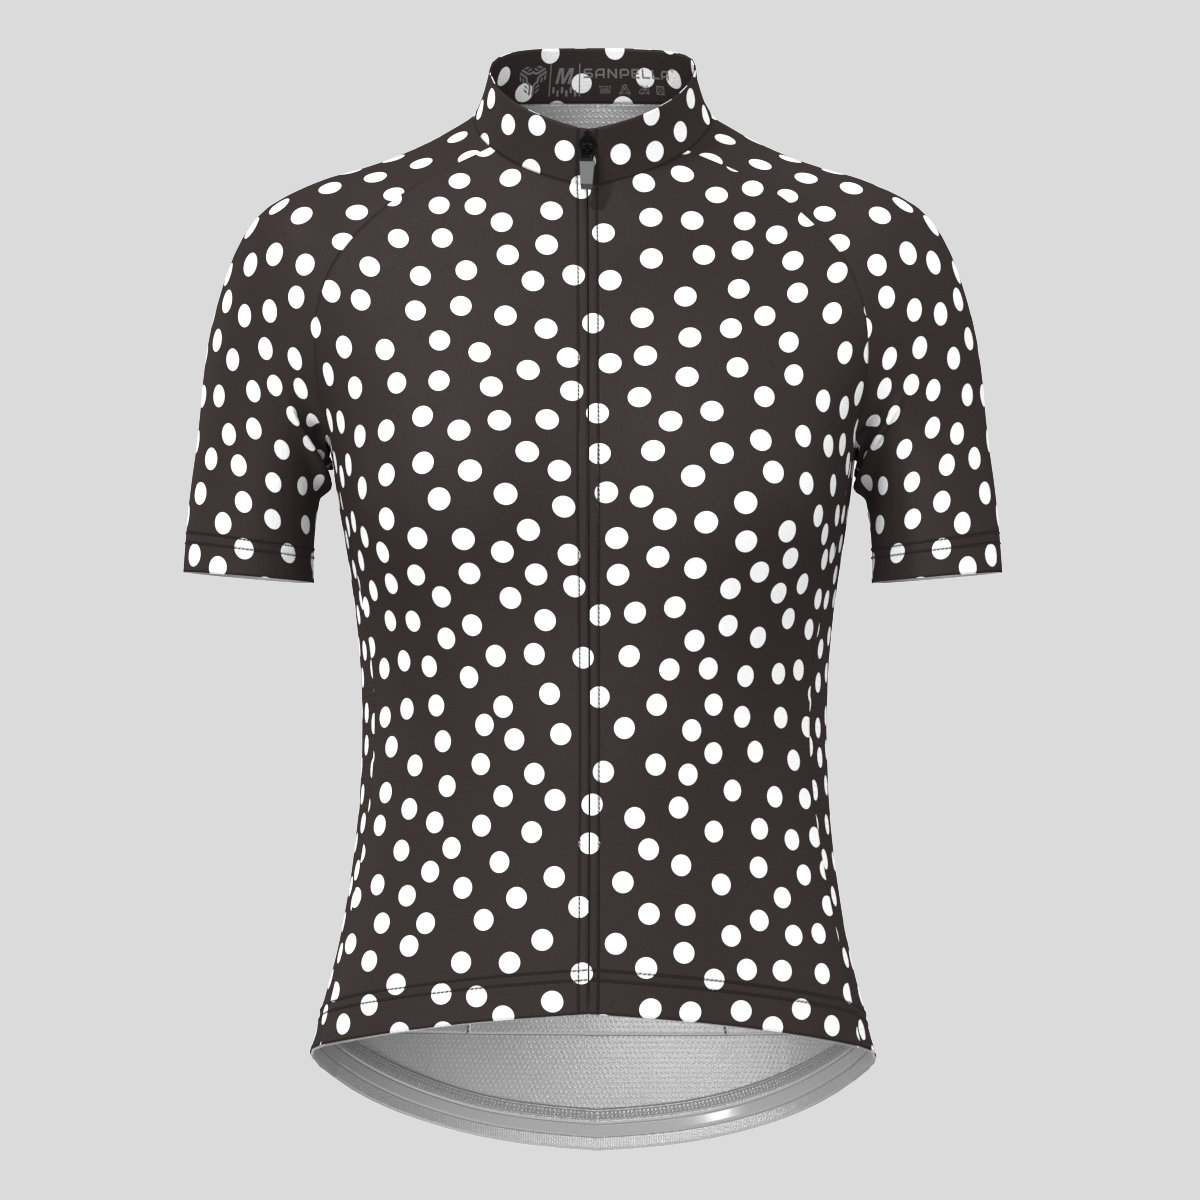 Women's Classic Polka Dots Cycling Jersey - Black